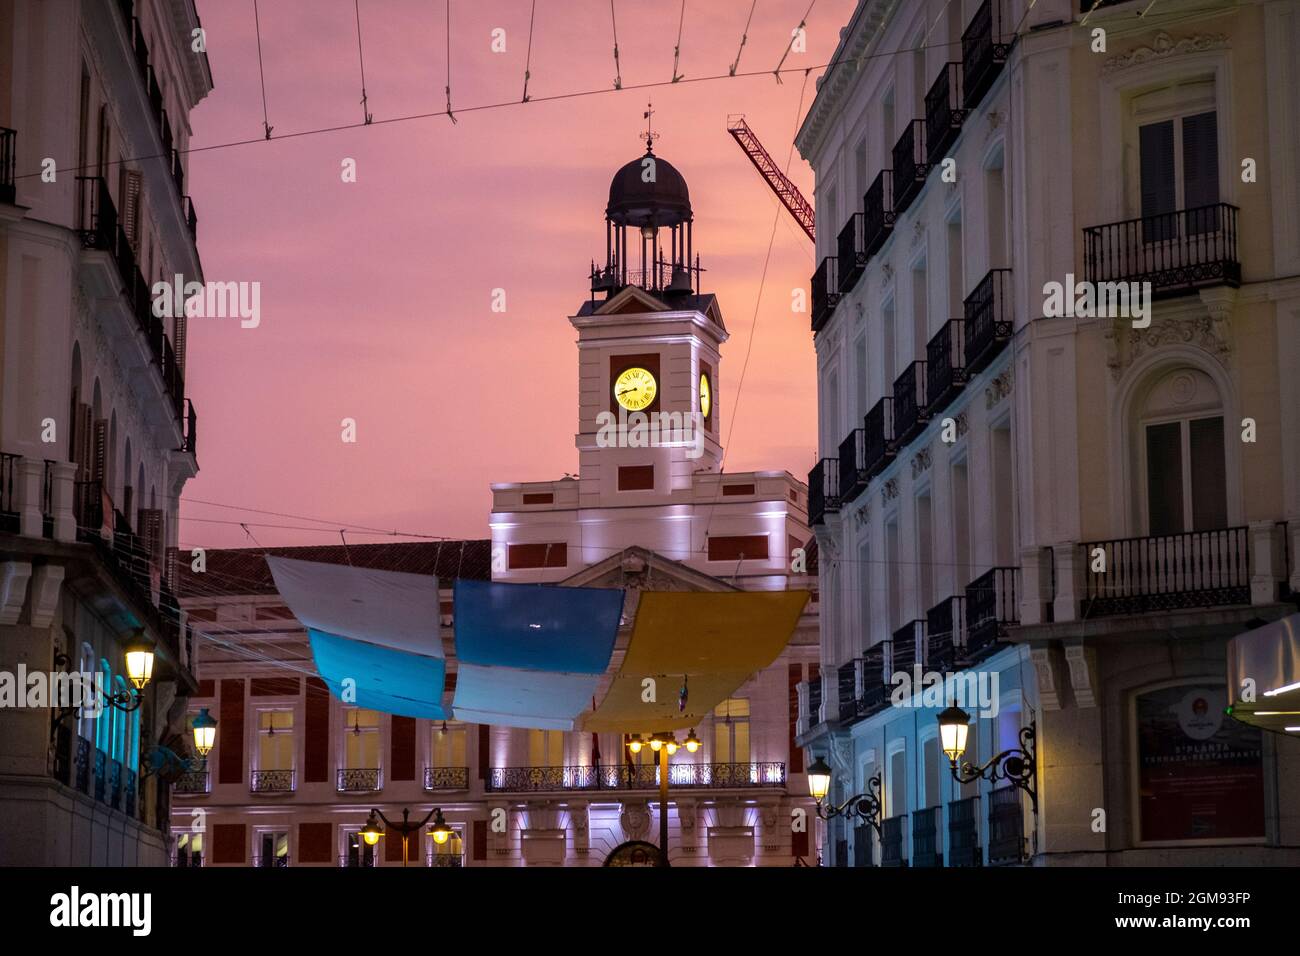 Glockenturm des Sonnentores, Puerta del Sol, Madrid, Spanien, bei Sonnenuntergang, Abendlicht, rosa Himmel Stockfoto